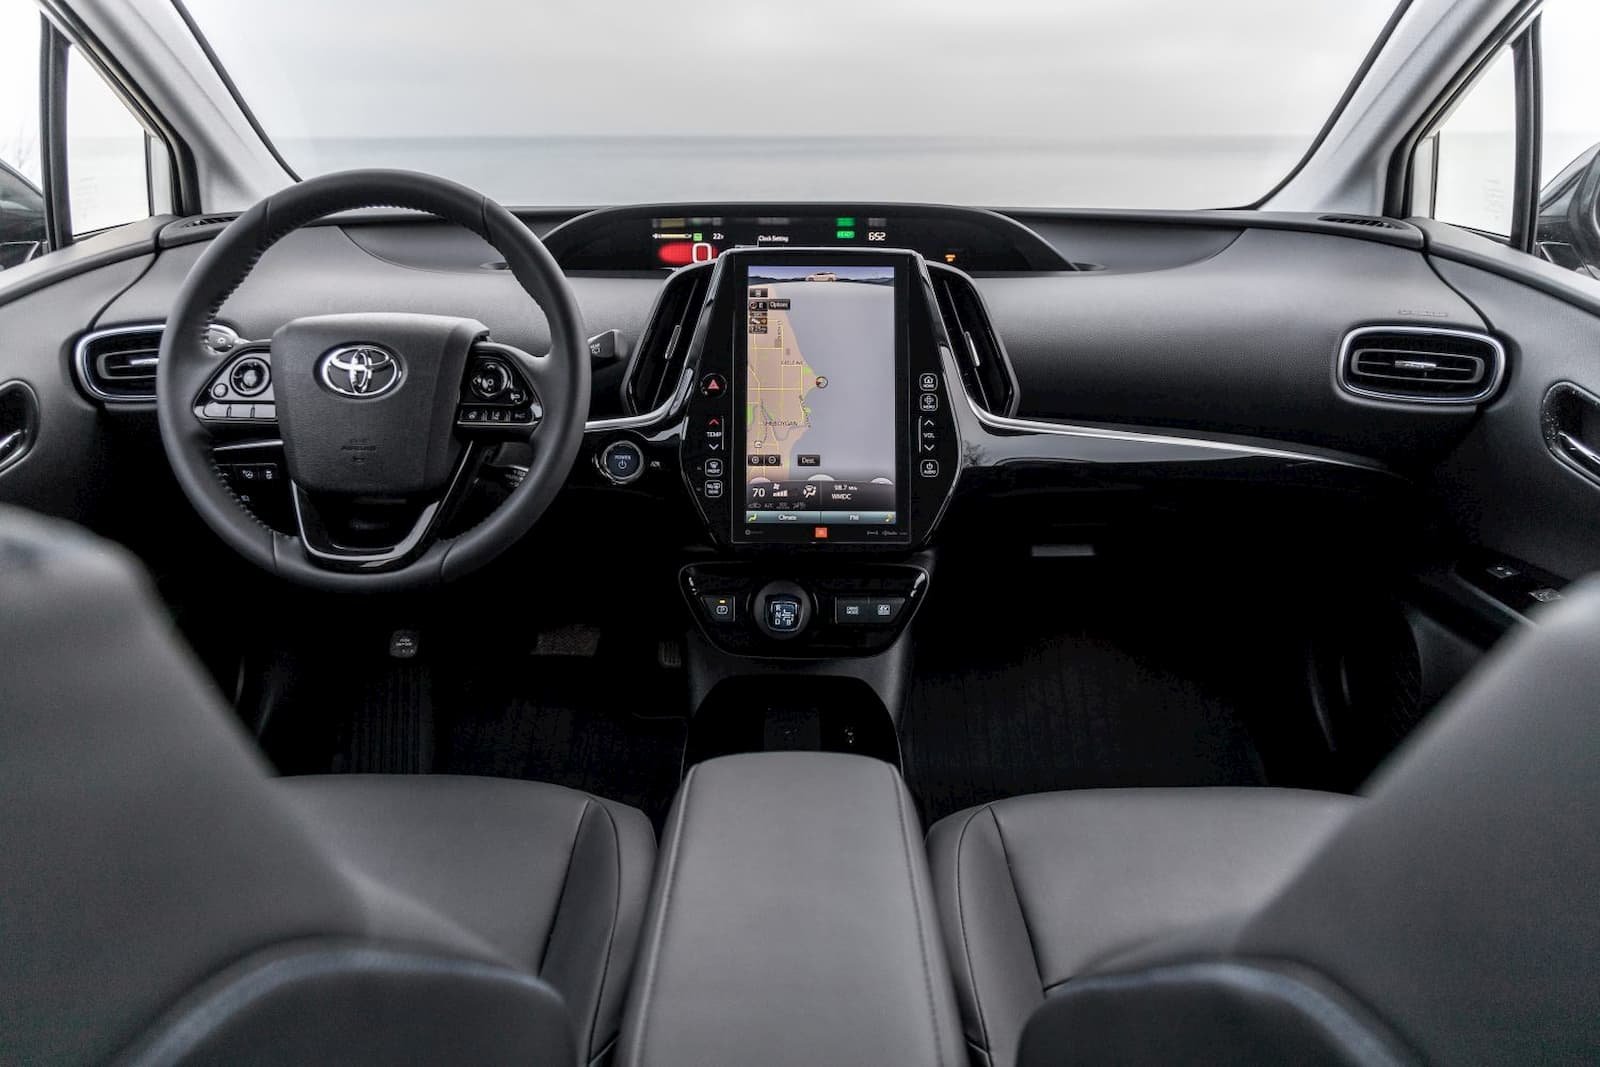 2020 Toyota Prius finally gets standard Apple CarPlay